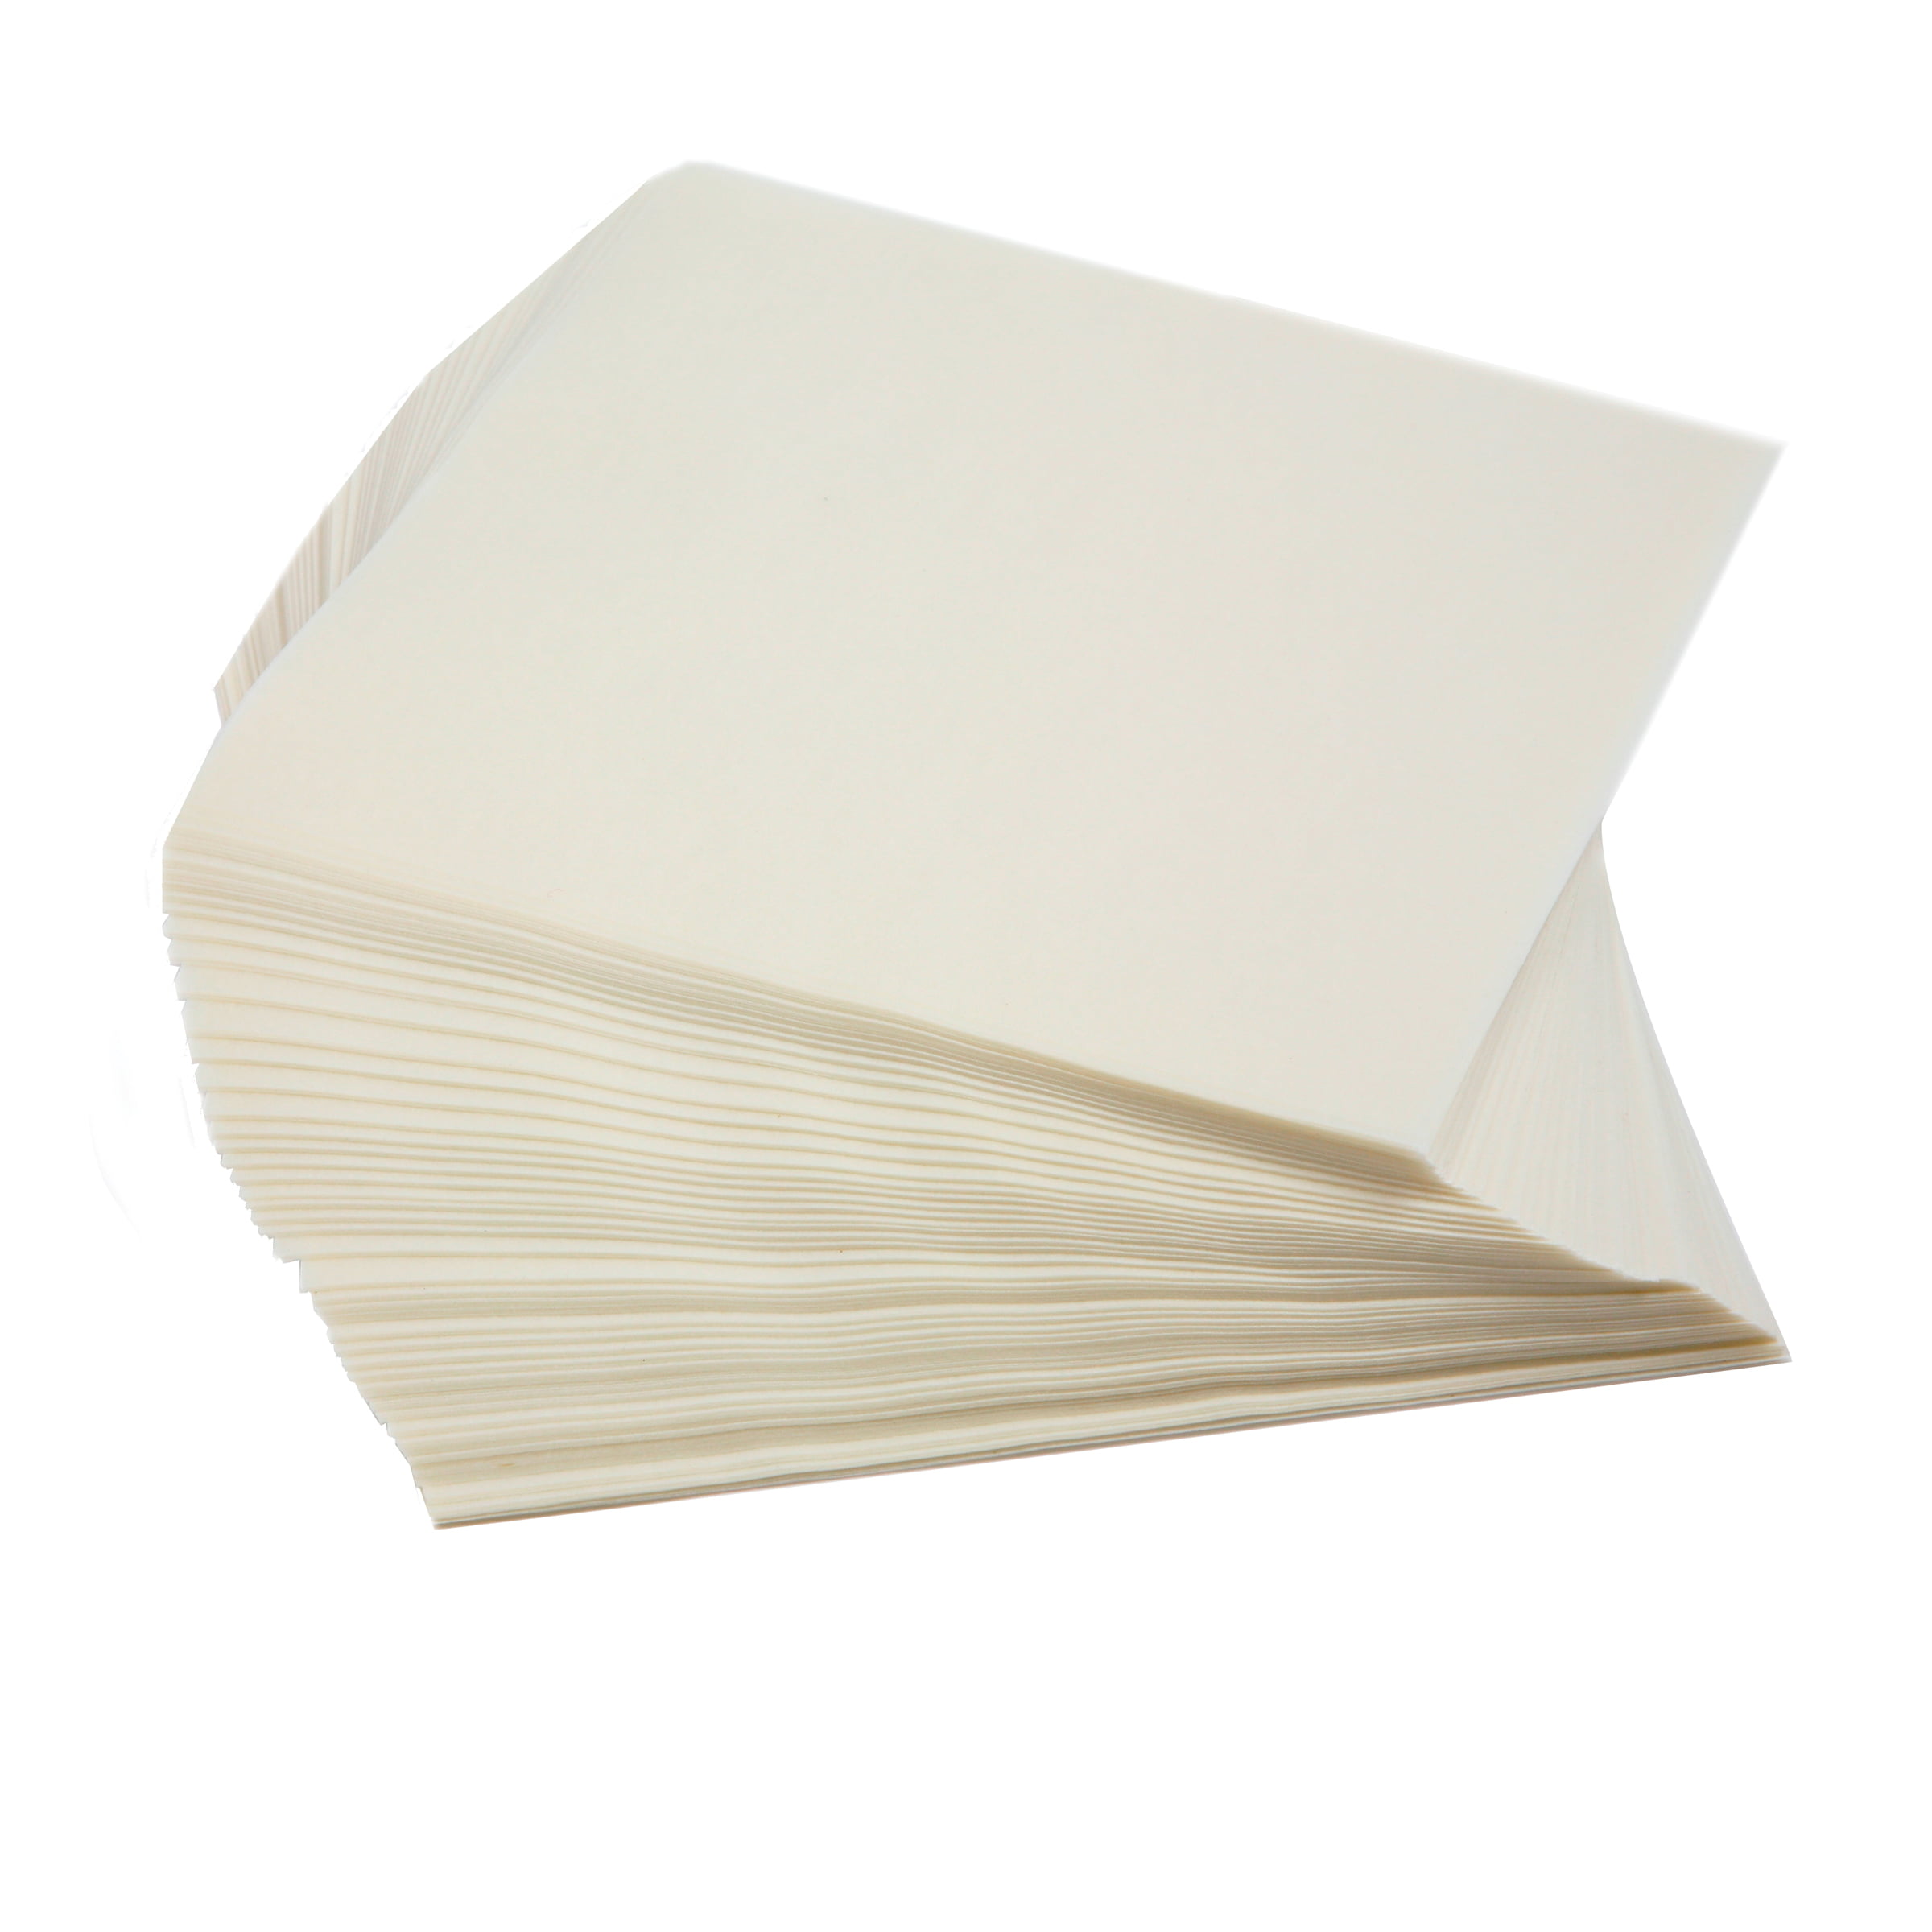 Details about   Square Wax Paper Sheets Hamburger Patty Squares 500 Sheets 